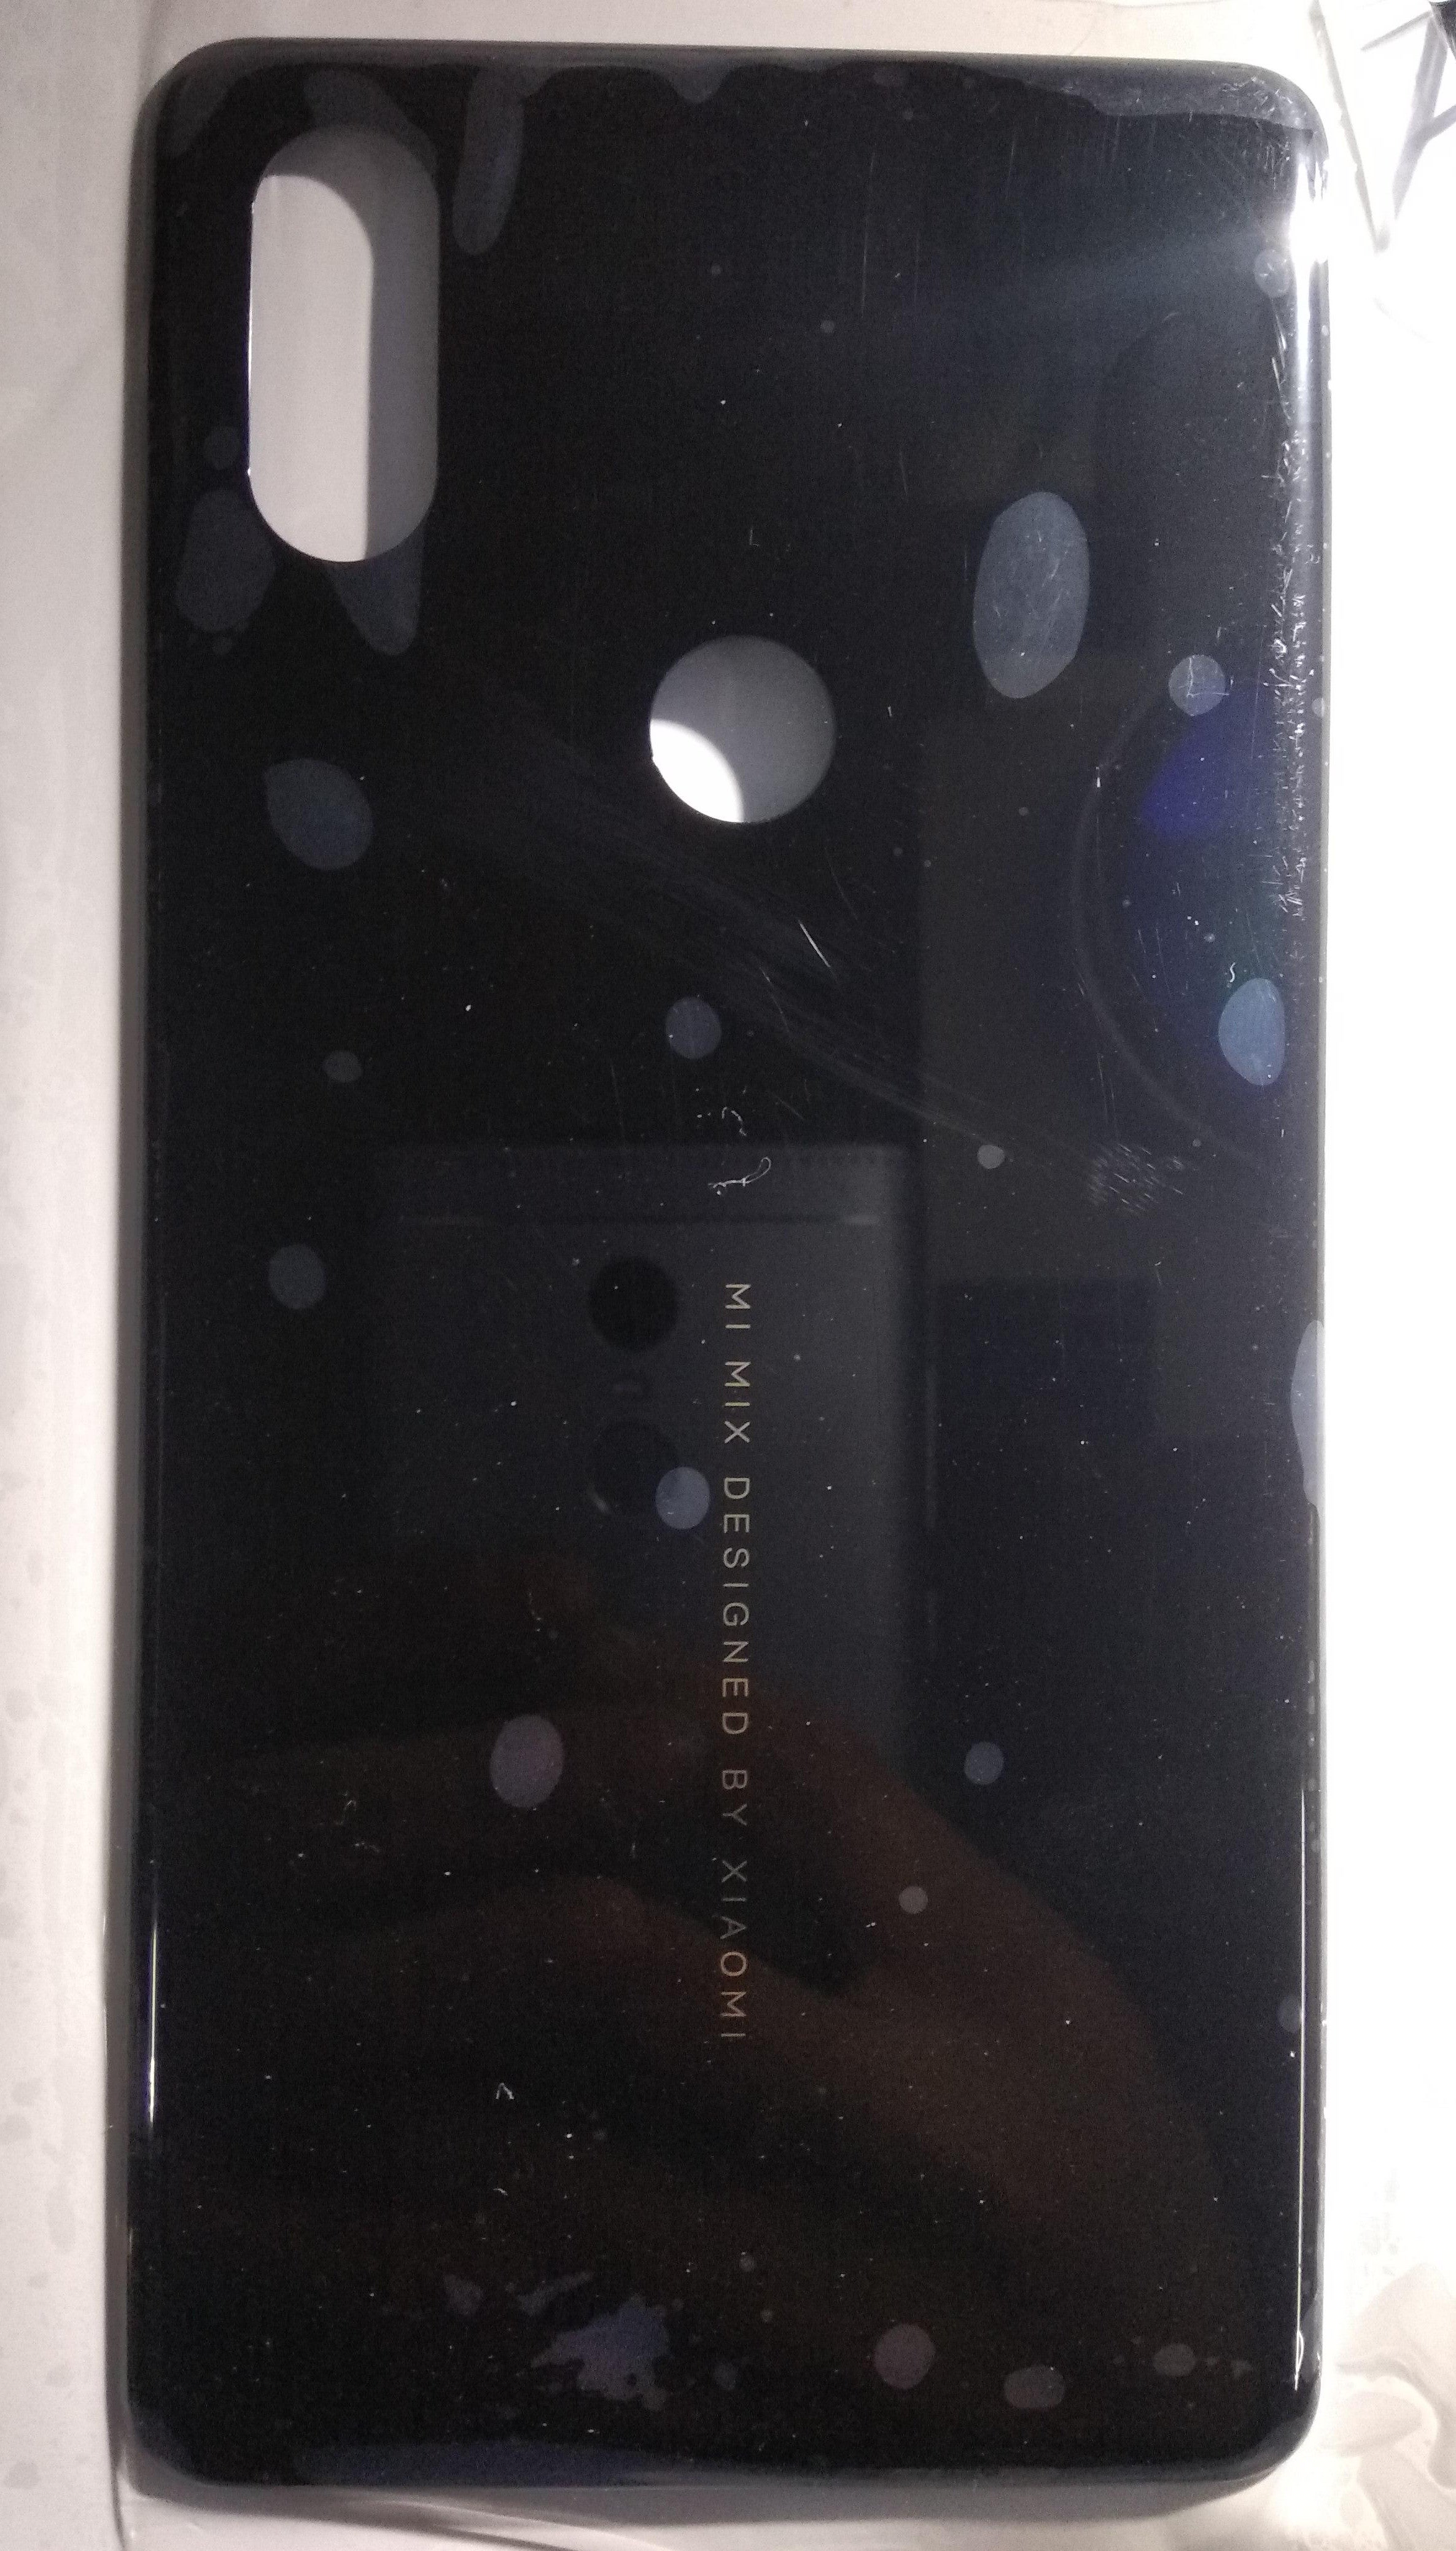 Alleged Xiaomi Mi Mix3 rear panel - Alleged Xiaomi Mi Mix 3 back panel confirms rear-mounted fingerprint, dual camera